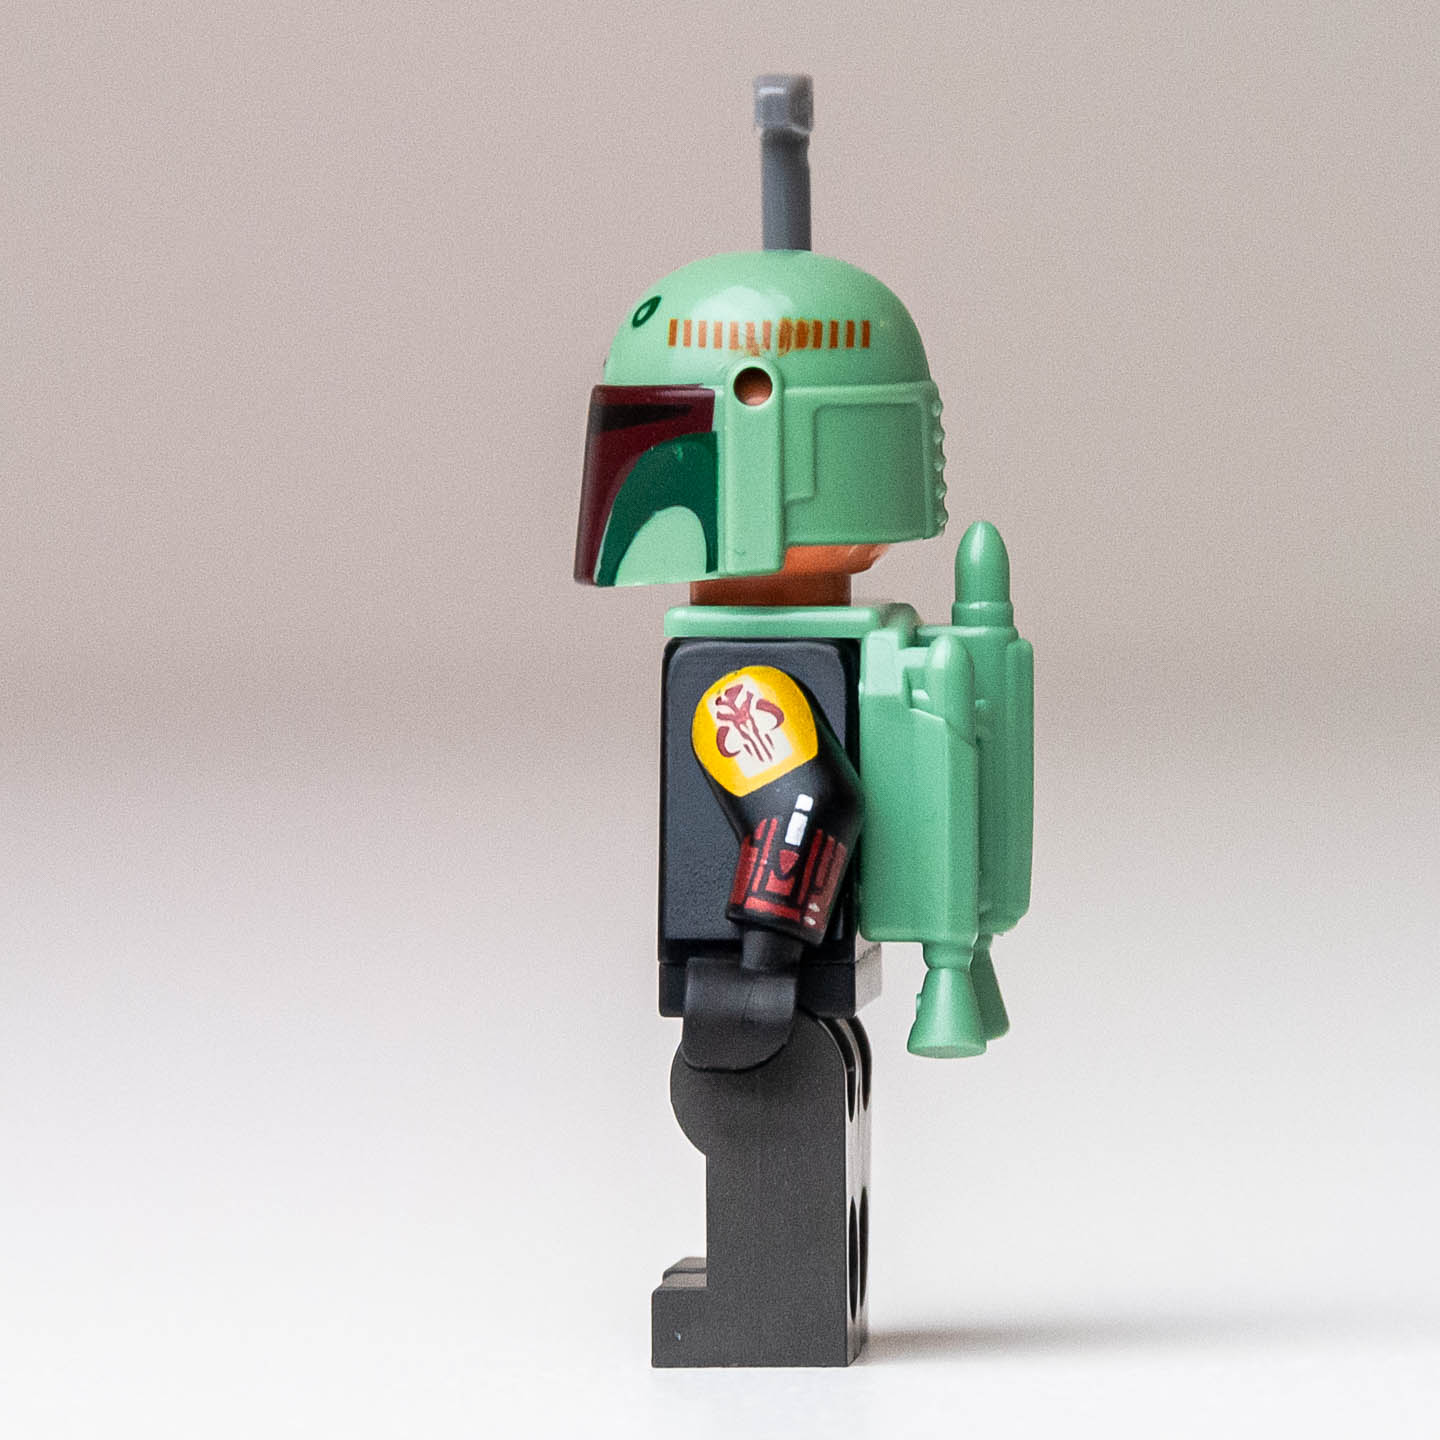 LEGO Star Wars The Mandalorian beskar boba Fett tusken yoda vizsla  Minifigure